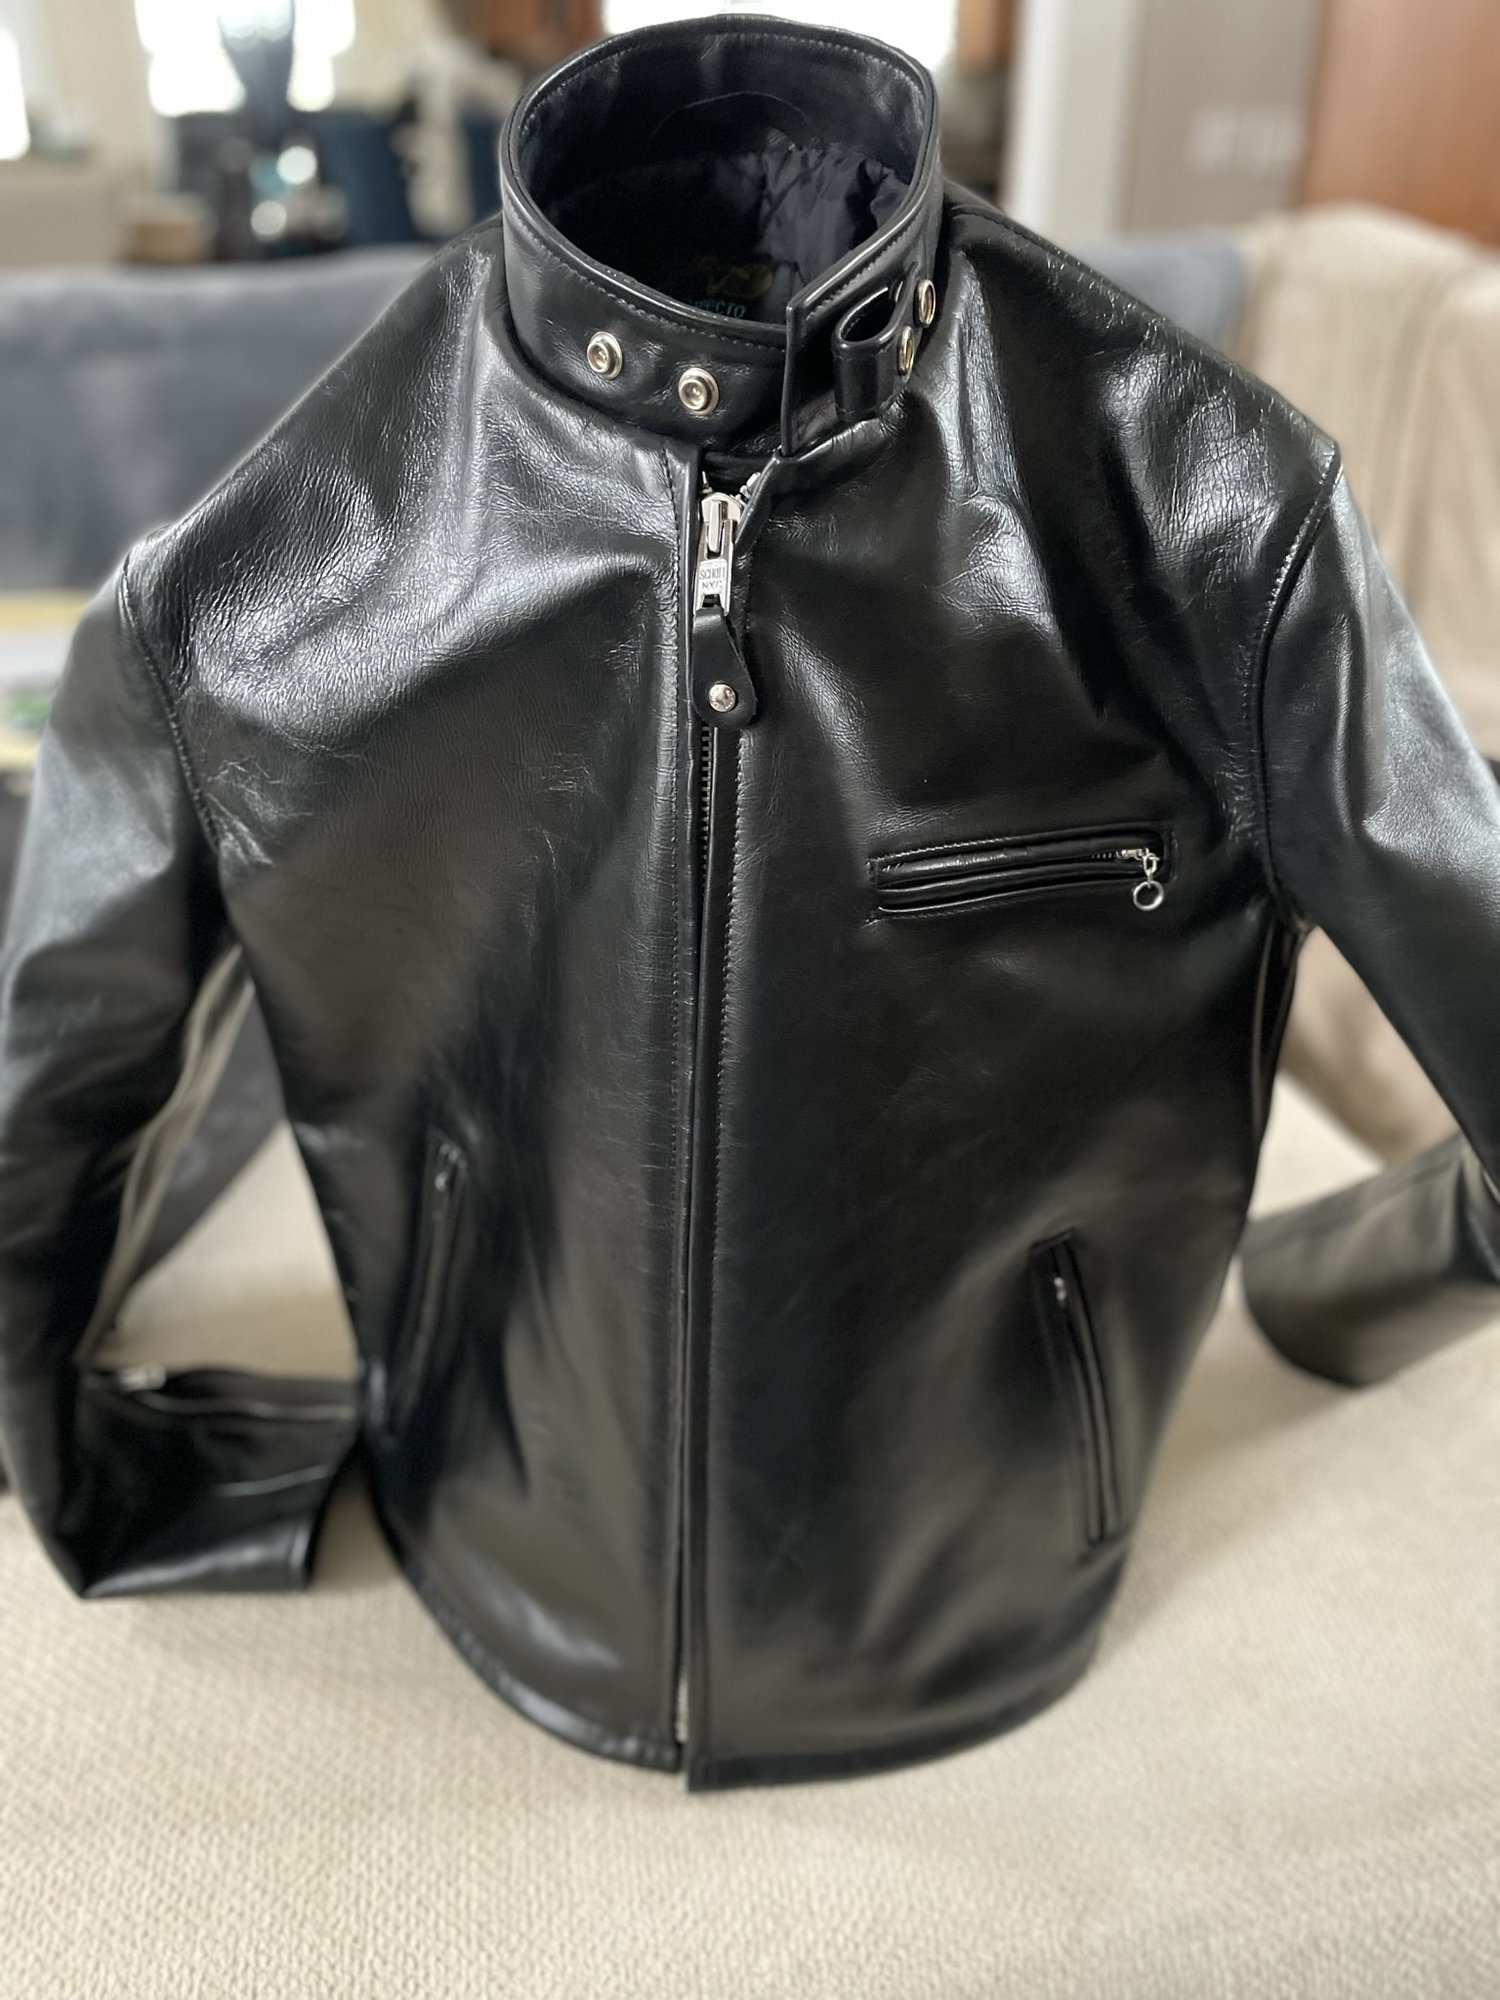 Schott leather jacket 641 and 641HH - Harley Davidson Forums